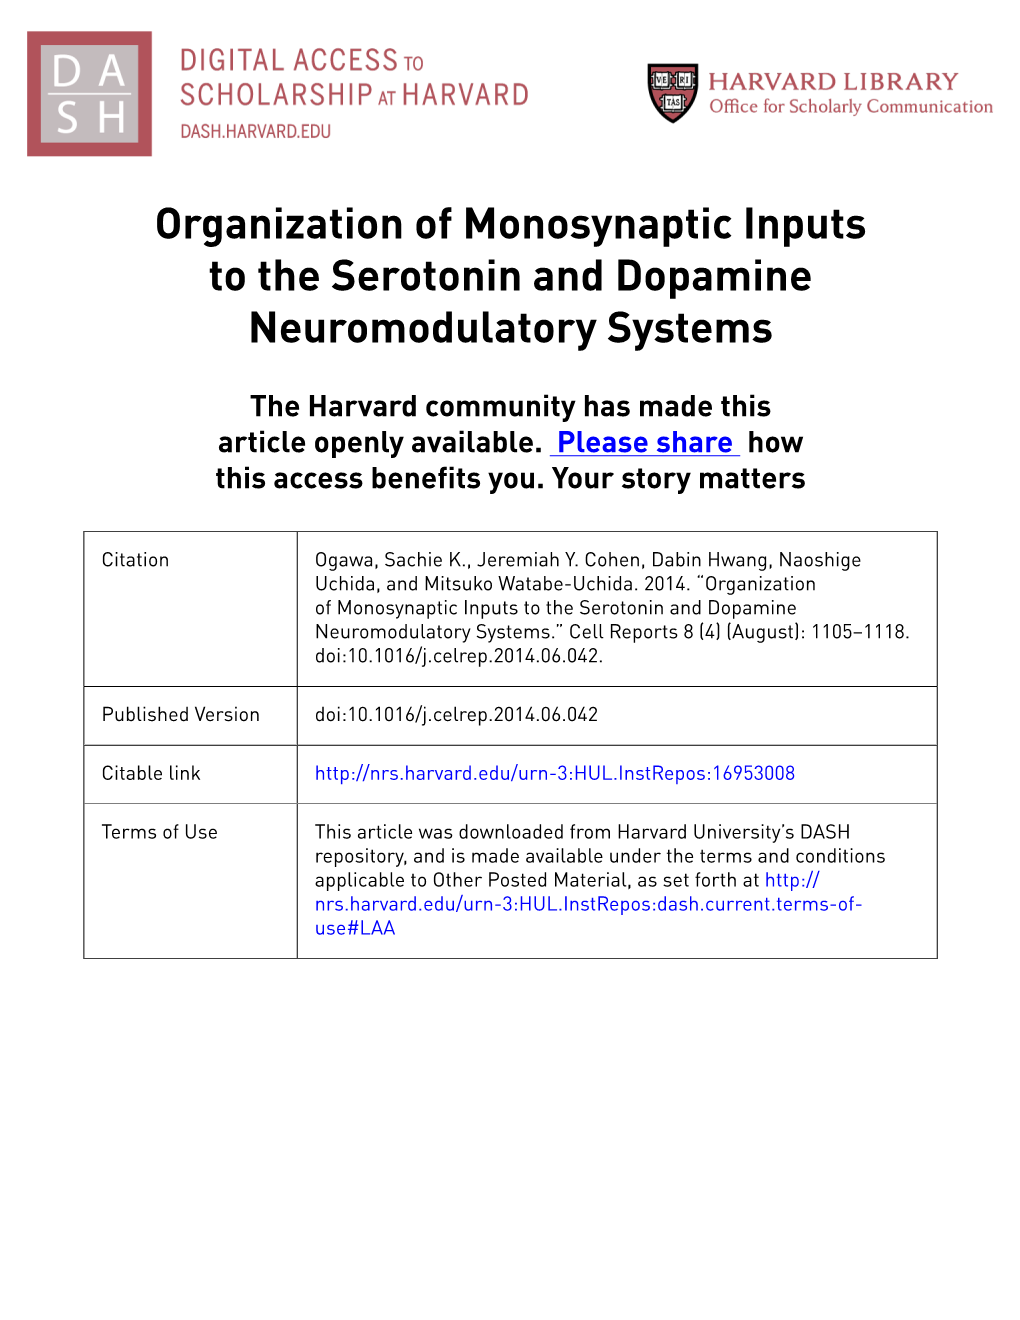 Organization of Monosynaptic Inputs to the Serotonin and Dopamine Neuromodulatory Systems